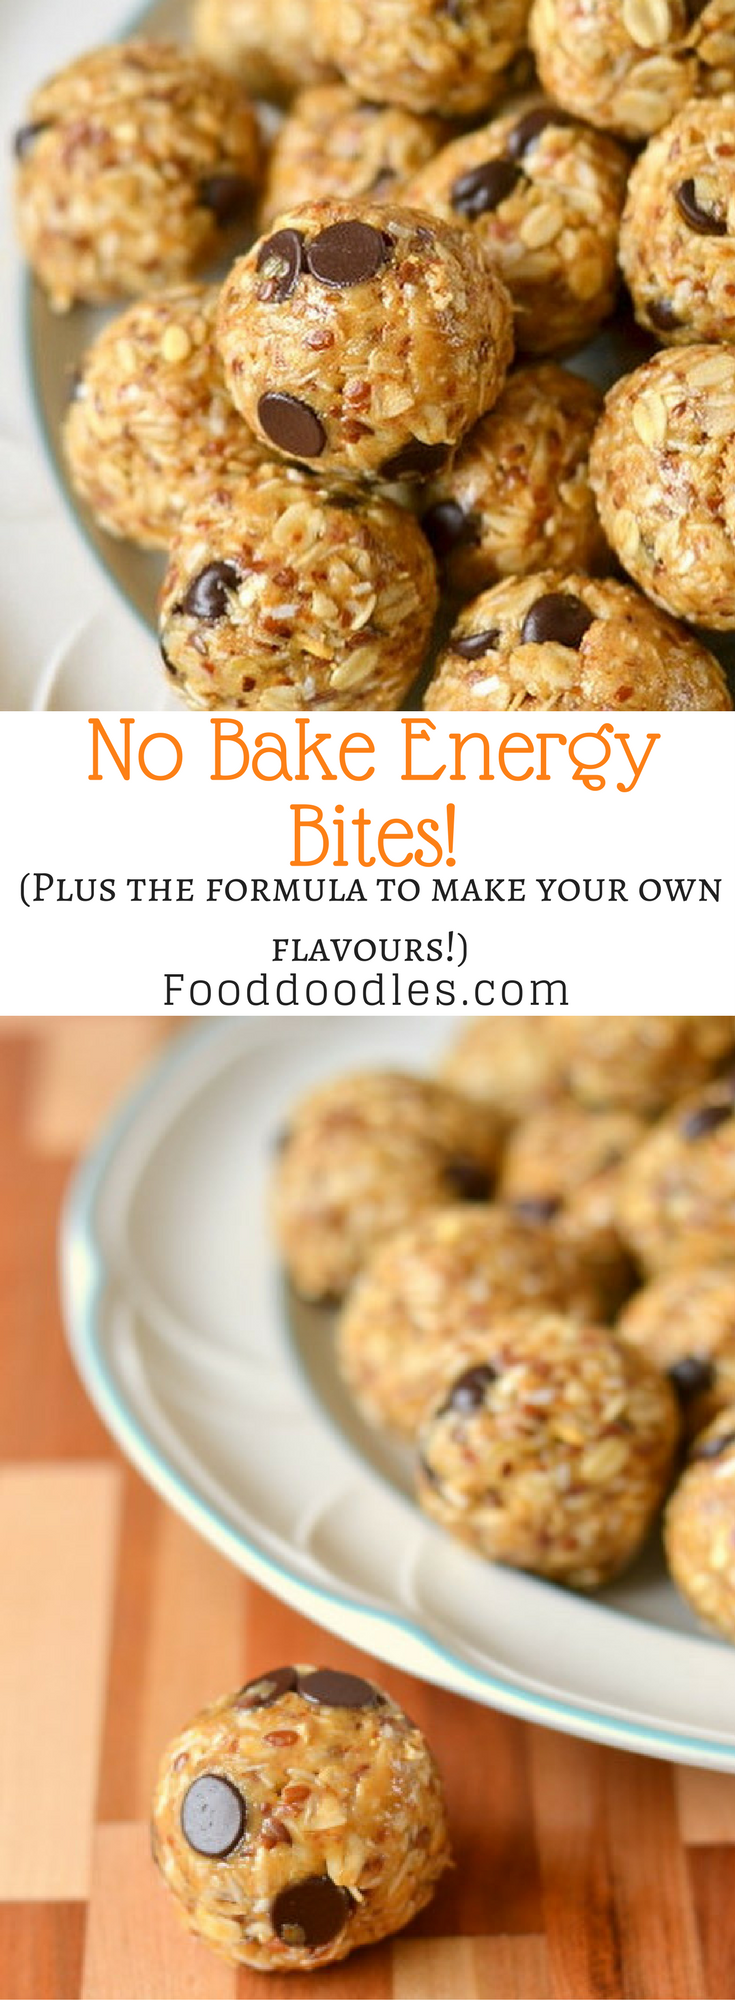 No-Bake Energy Bites (gluten-free, vegan options) | Easy Wholesome